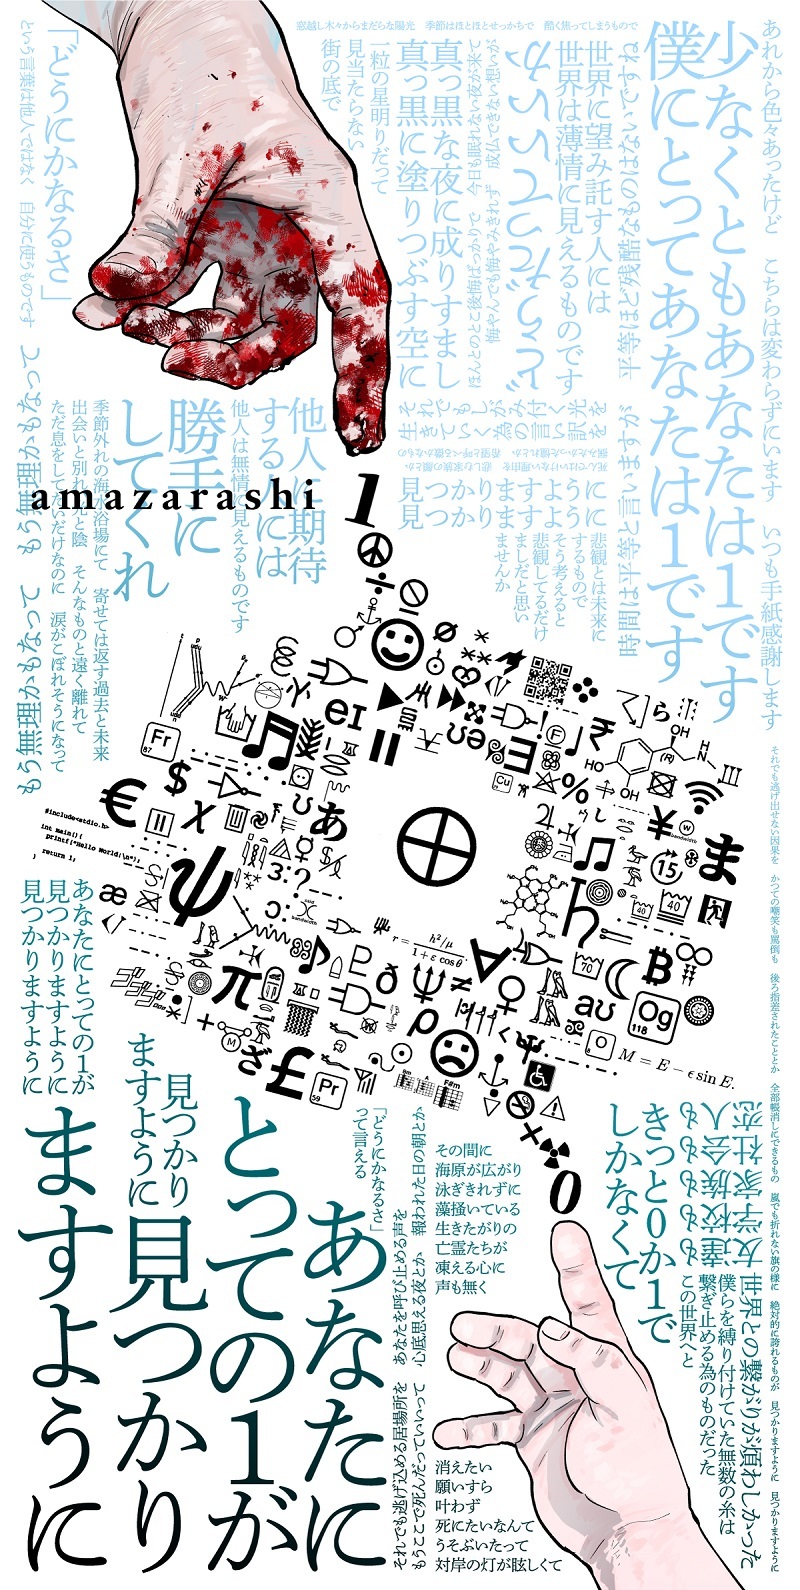 Amazarashiアーティスト写真の画像 Kai You Net